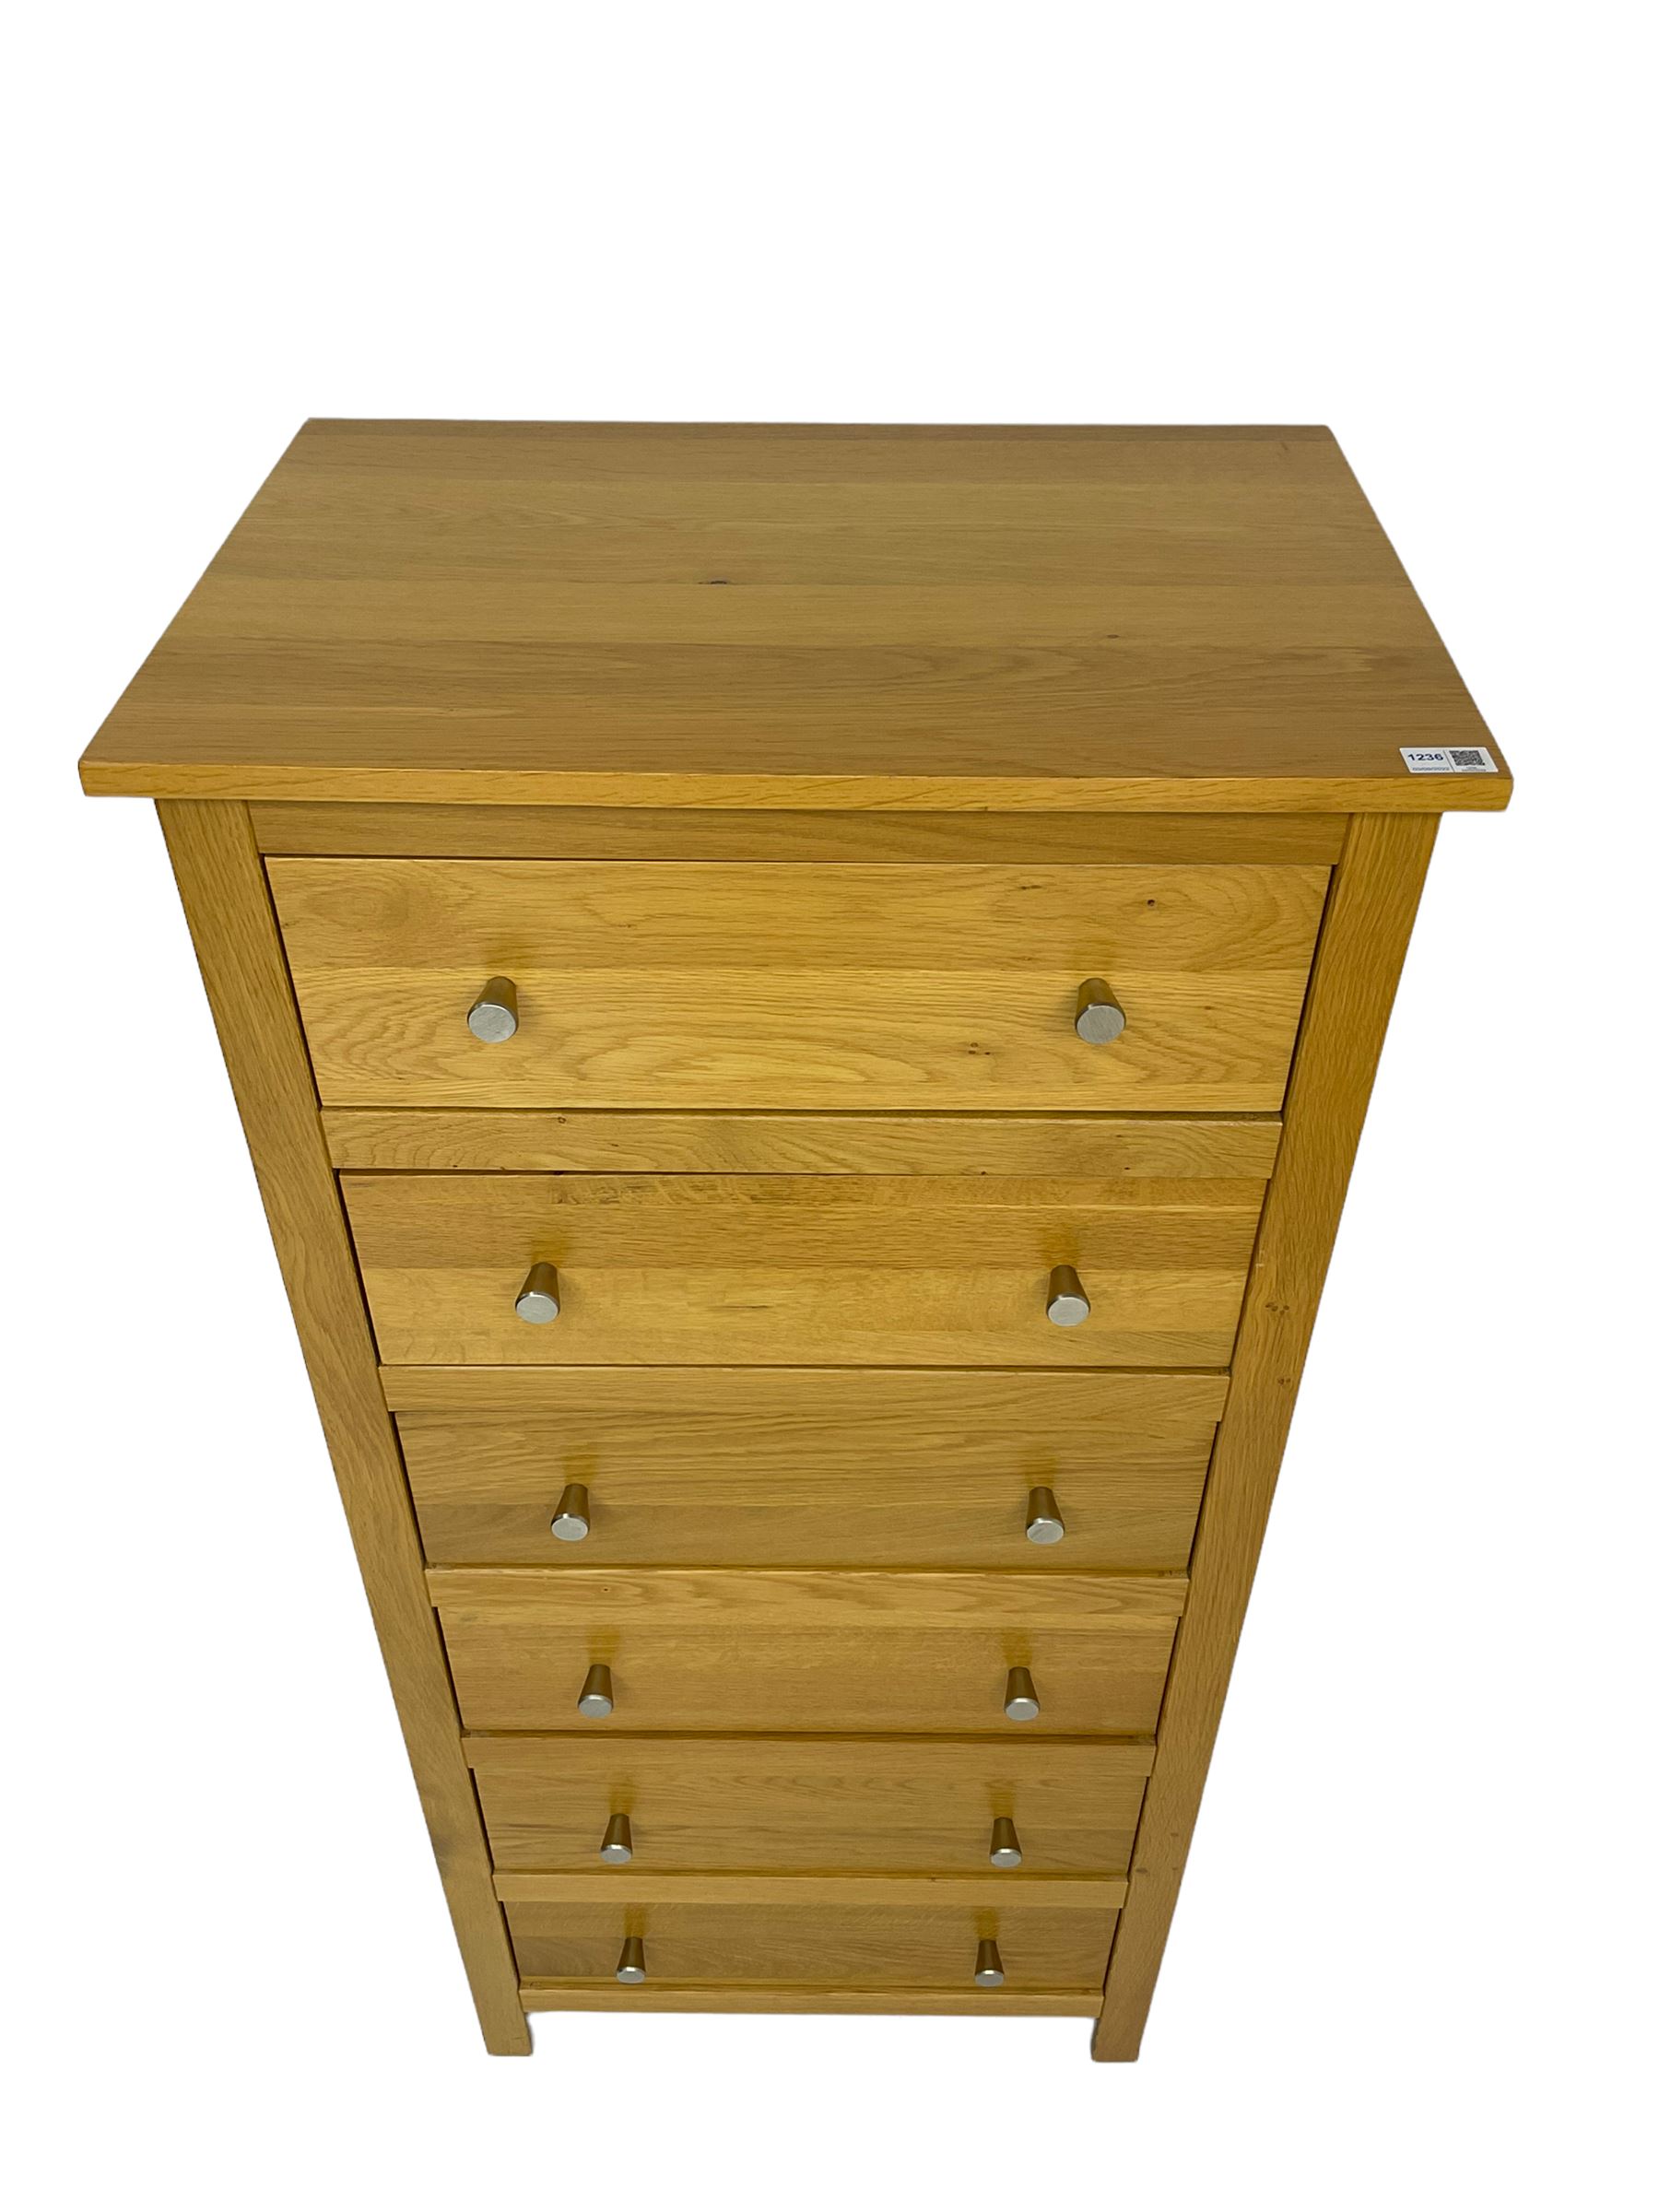 Light oak six drawer chest - Image 6 of 6